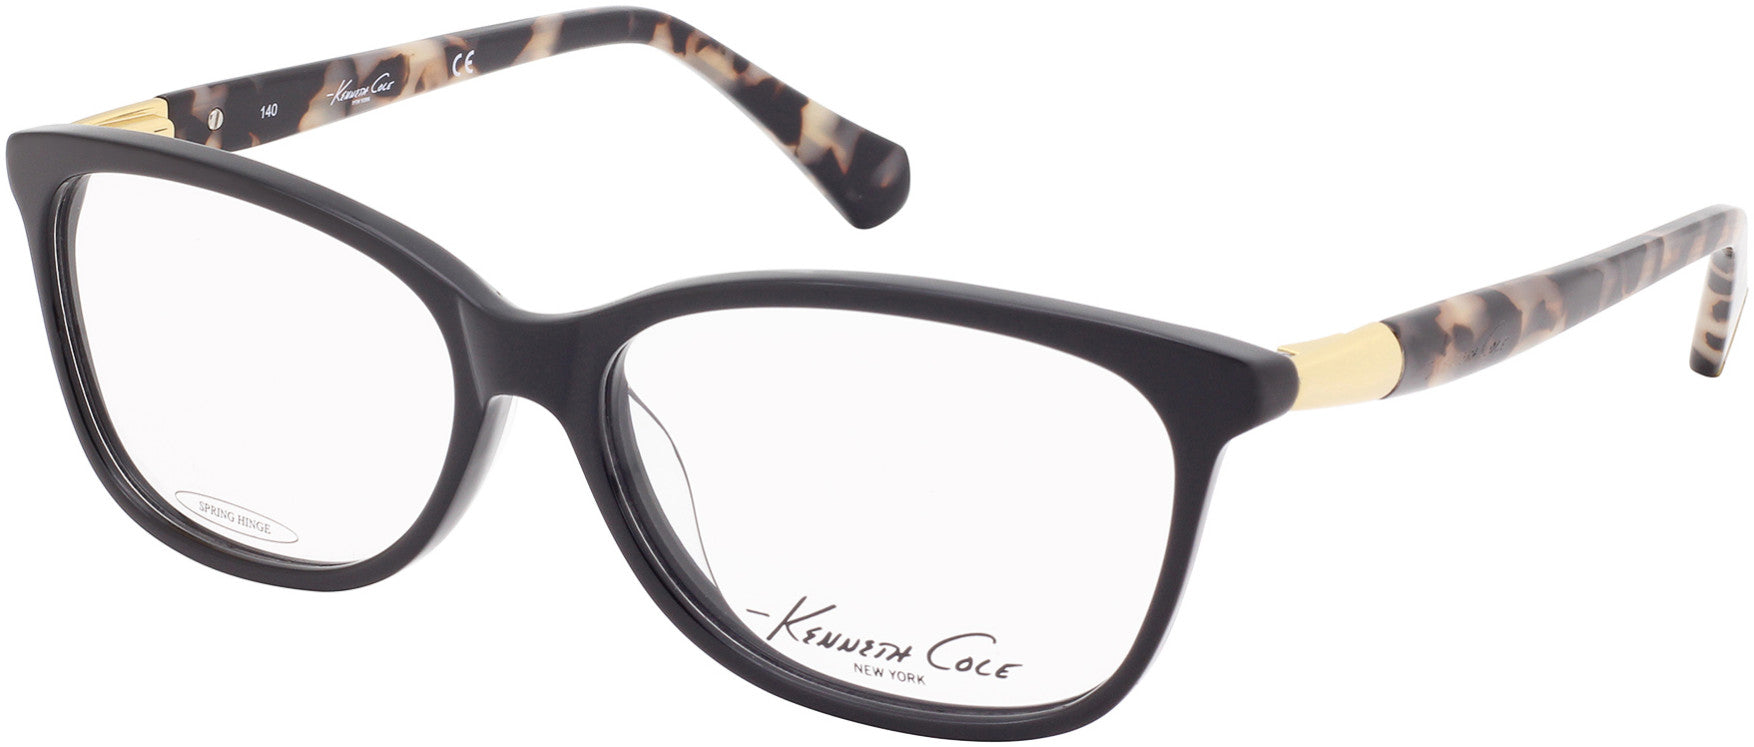 Kenneth Cole New York,Kenneth Cole Reaction KC0212 Eyeglasses 001-001 - Shiny Black